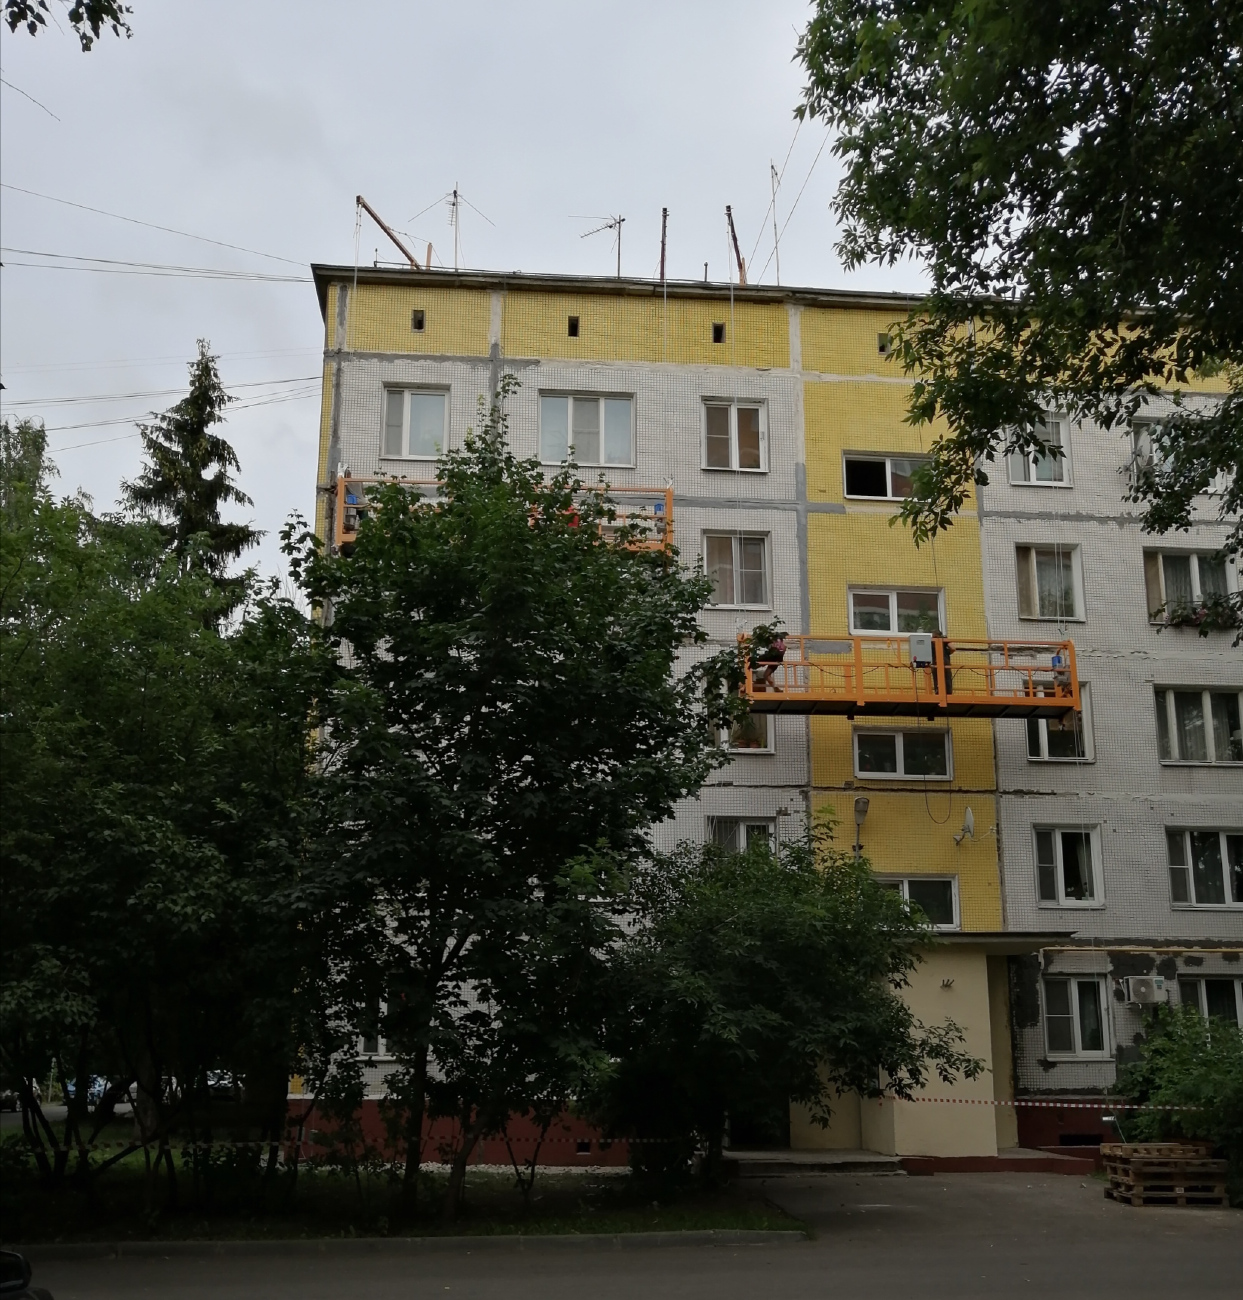 Voskresenskoye Settlement, Пос. подсобного хозяйства Воскресенское, 25